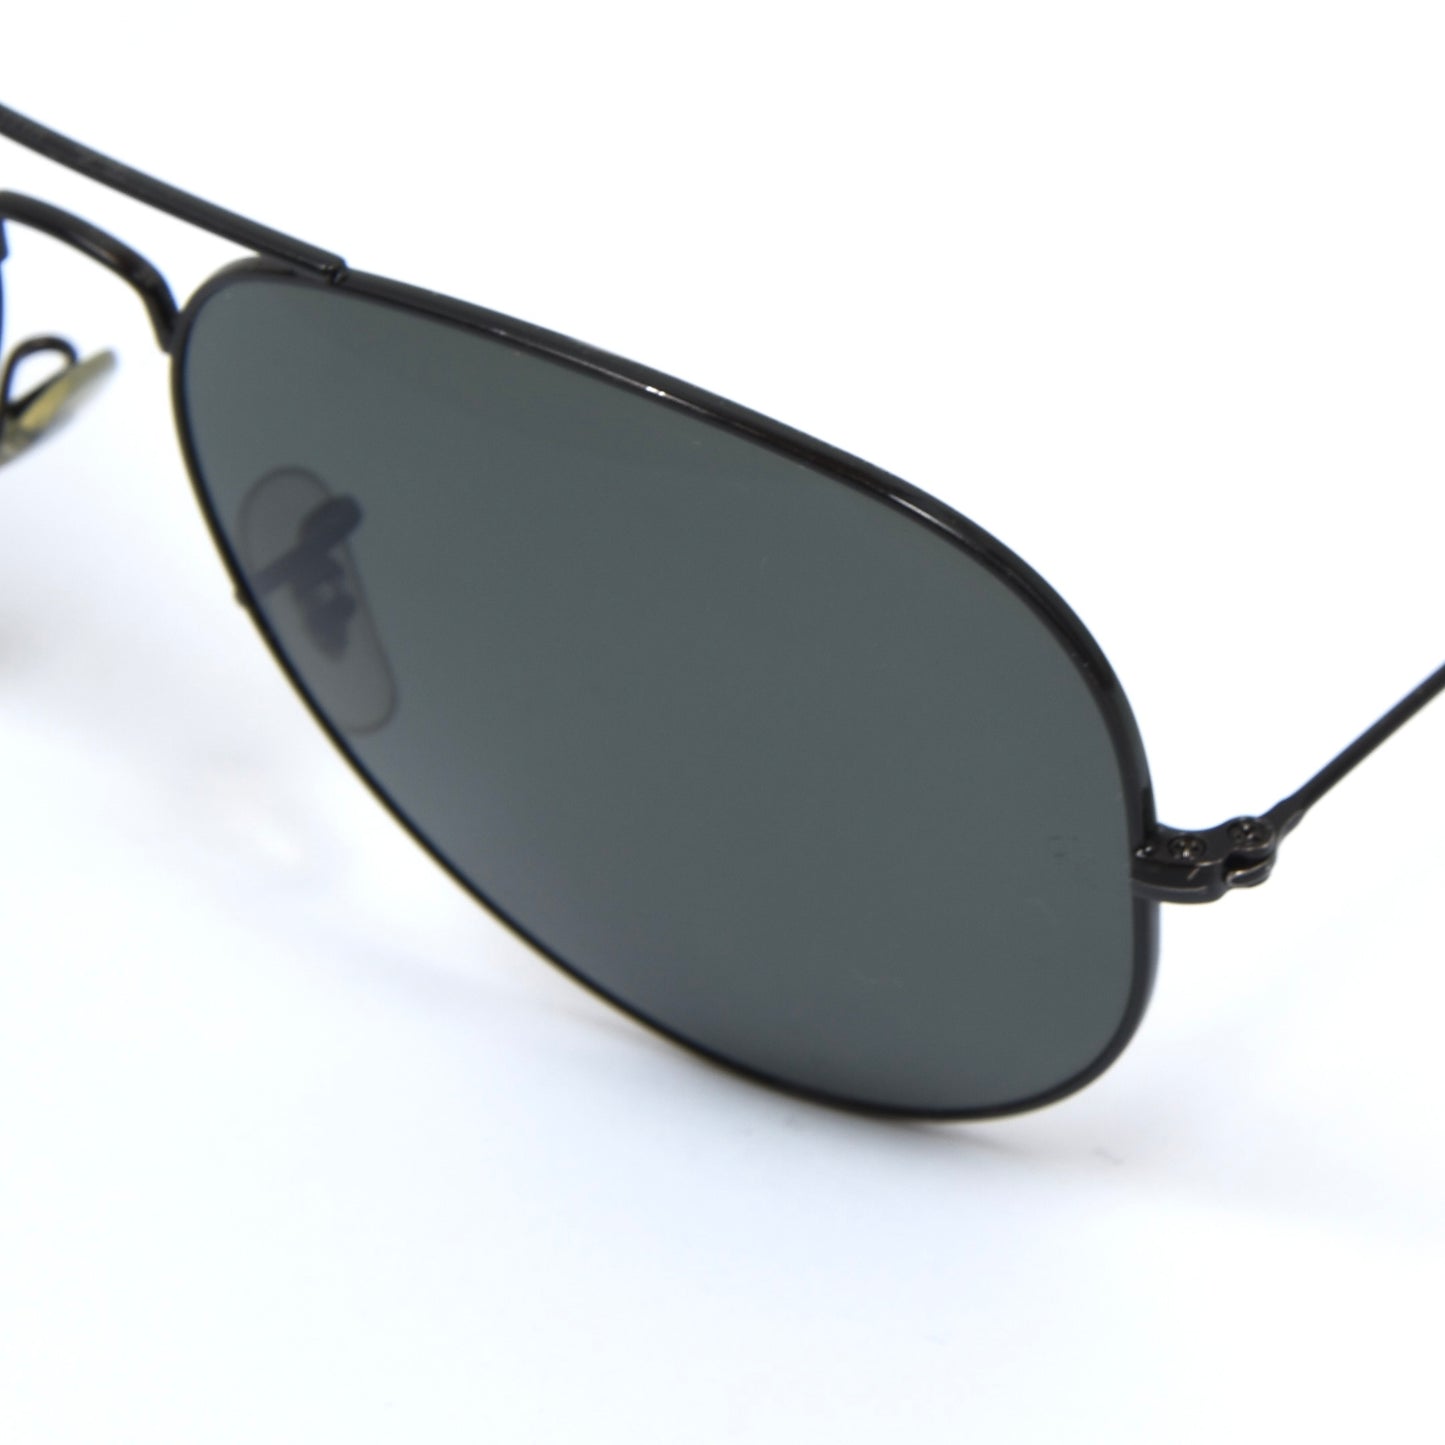 Ray-Ban Mod. 3025 Large Aviator Sunglasses - Black